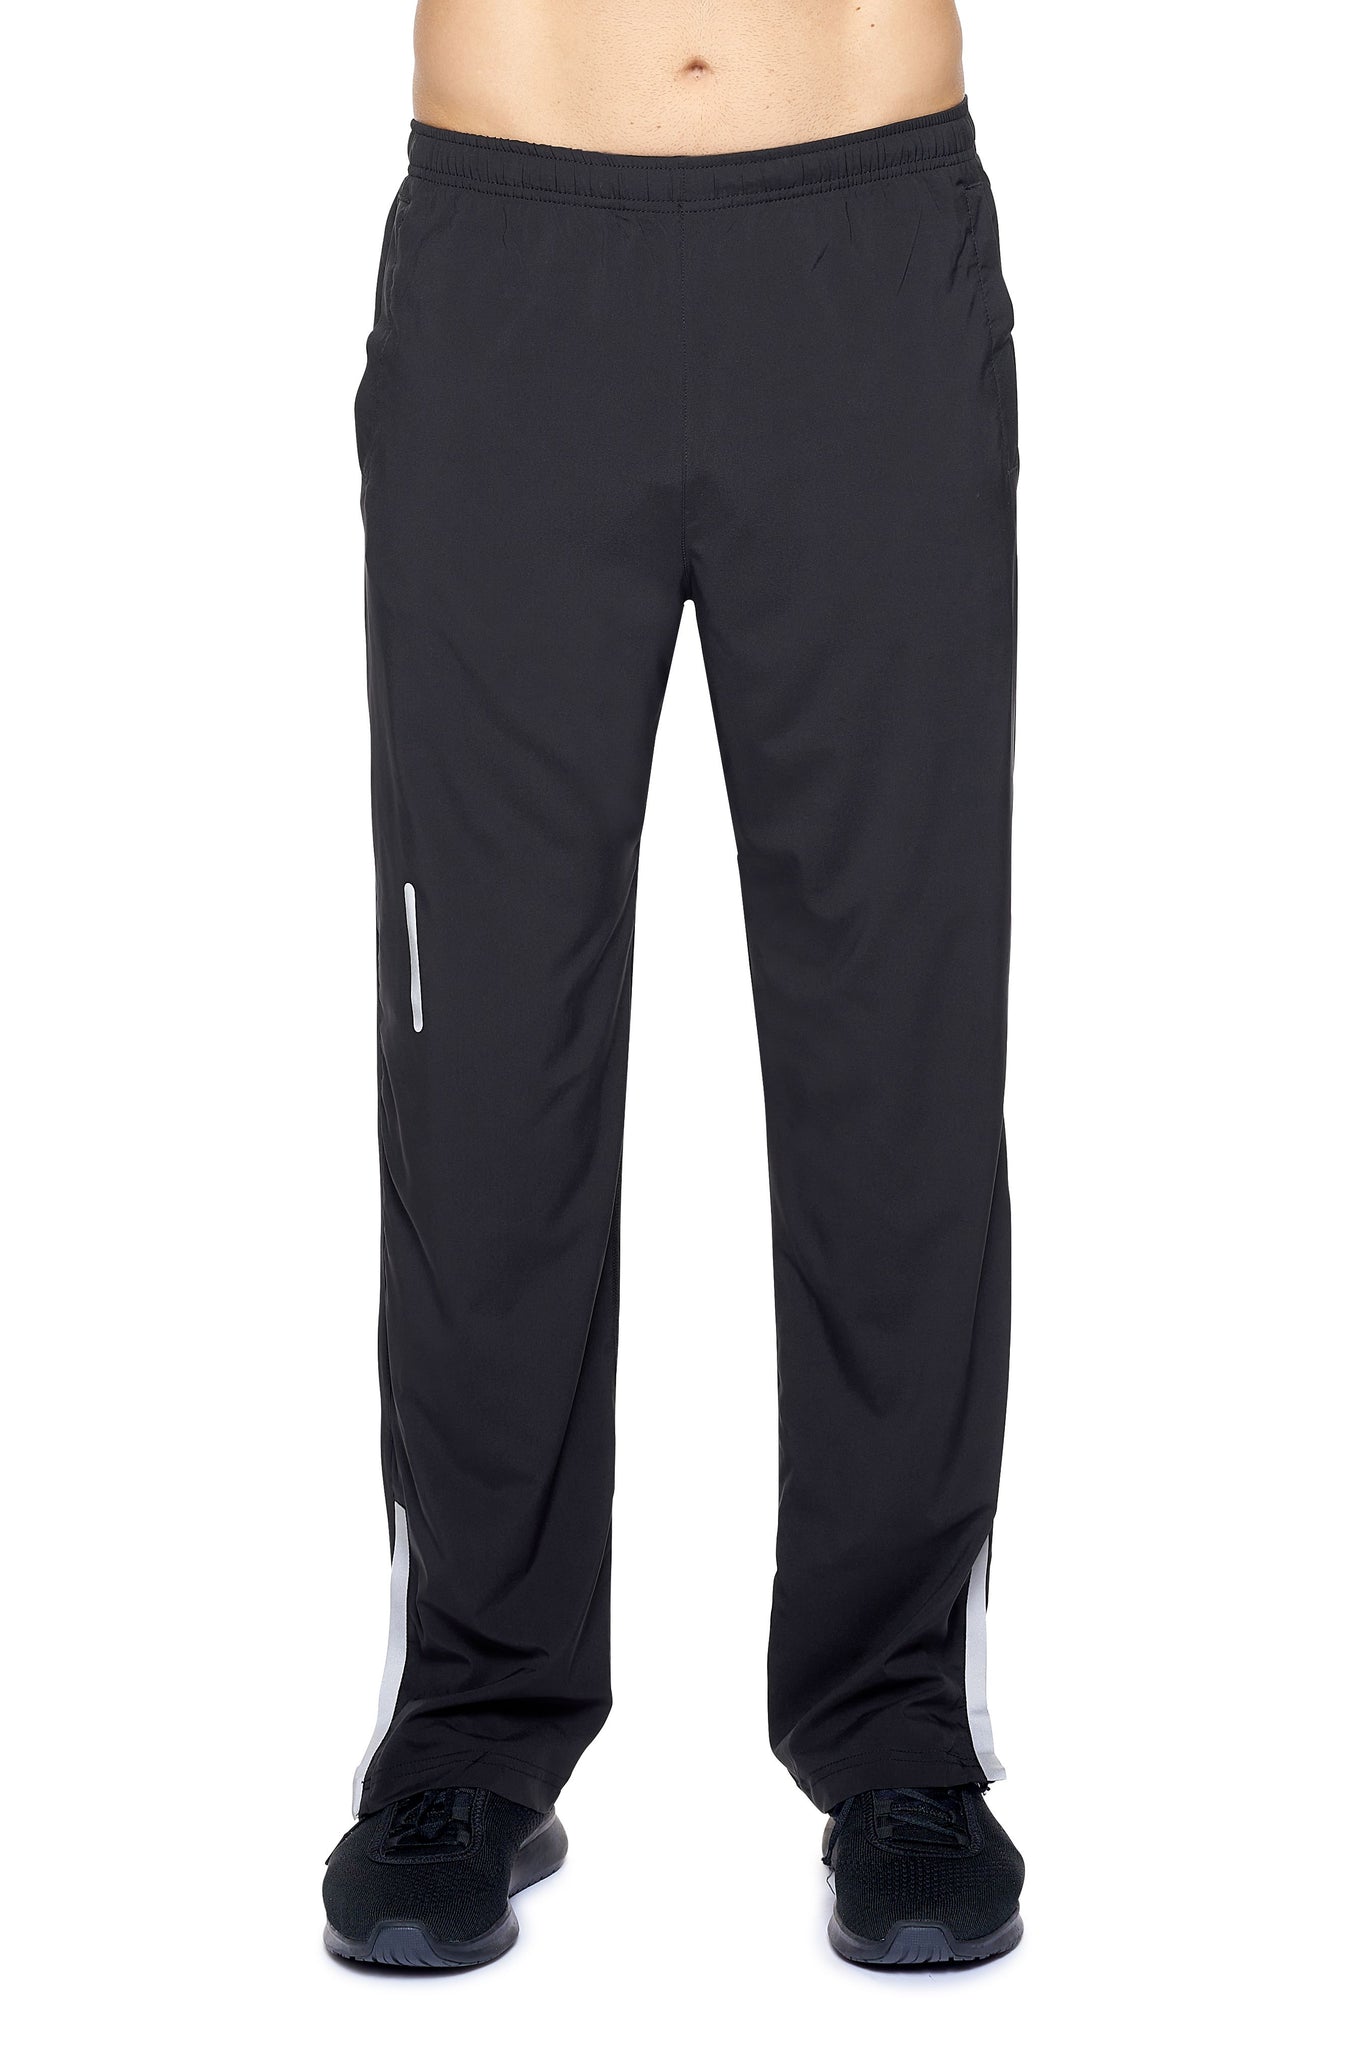 WL1126 Men's City Pants - Expert Brand#black